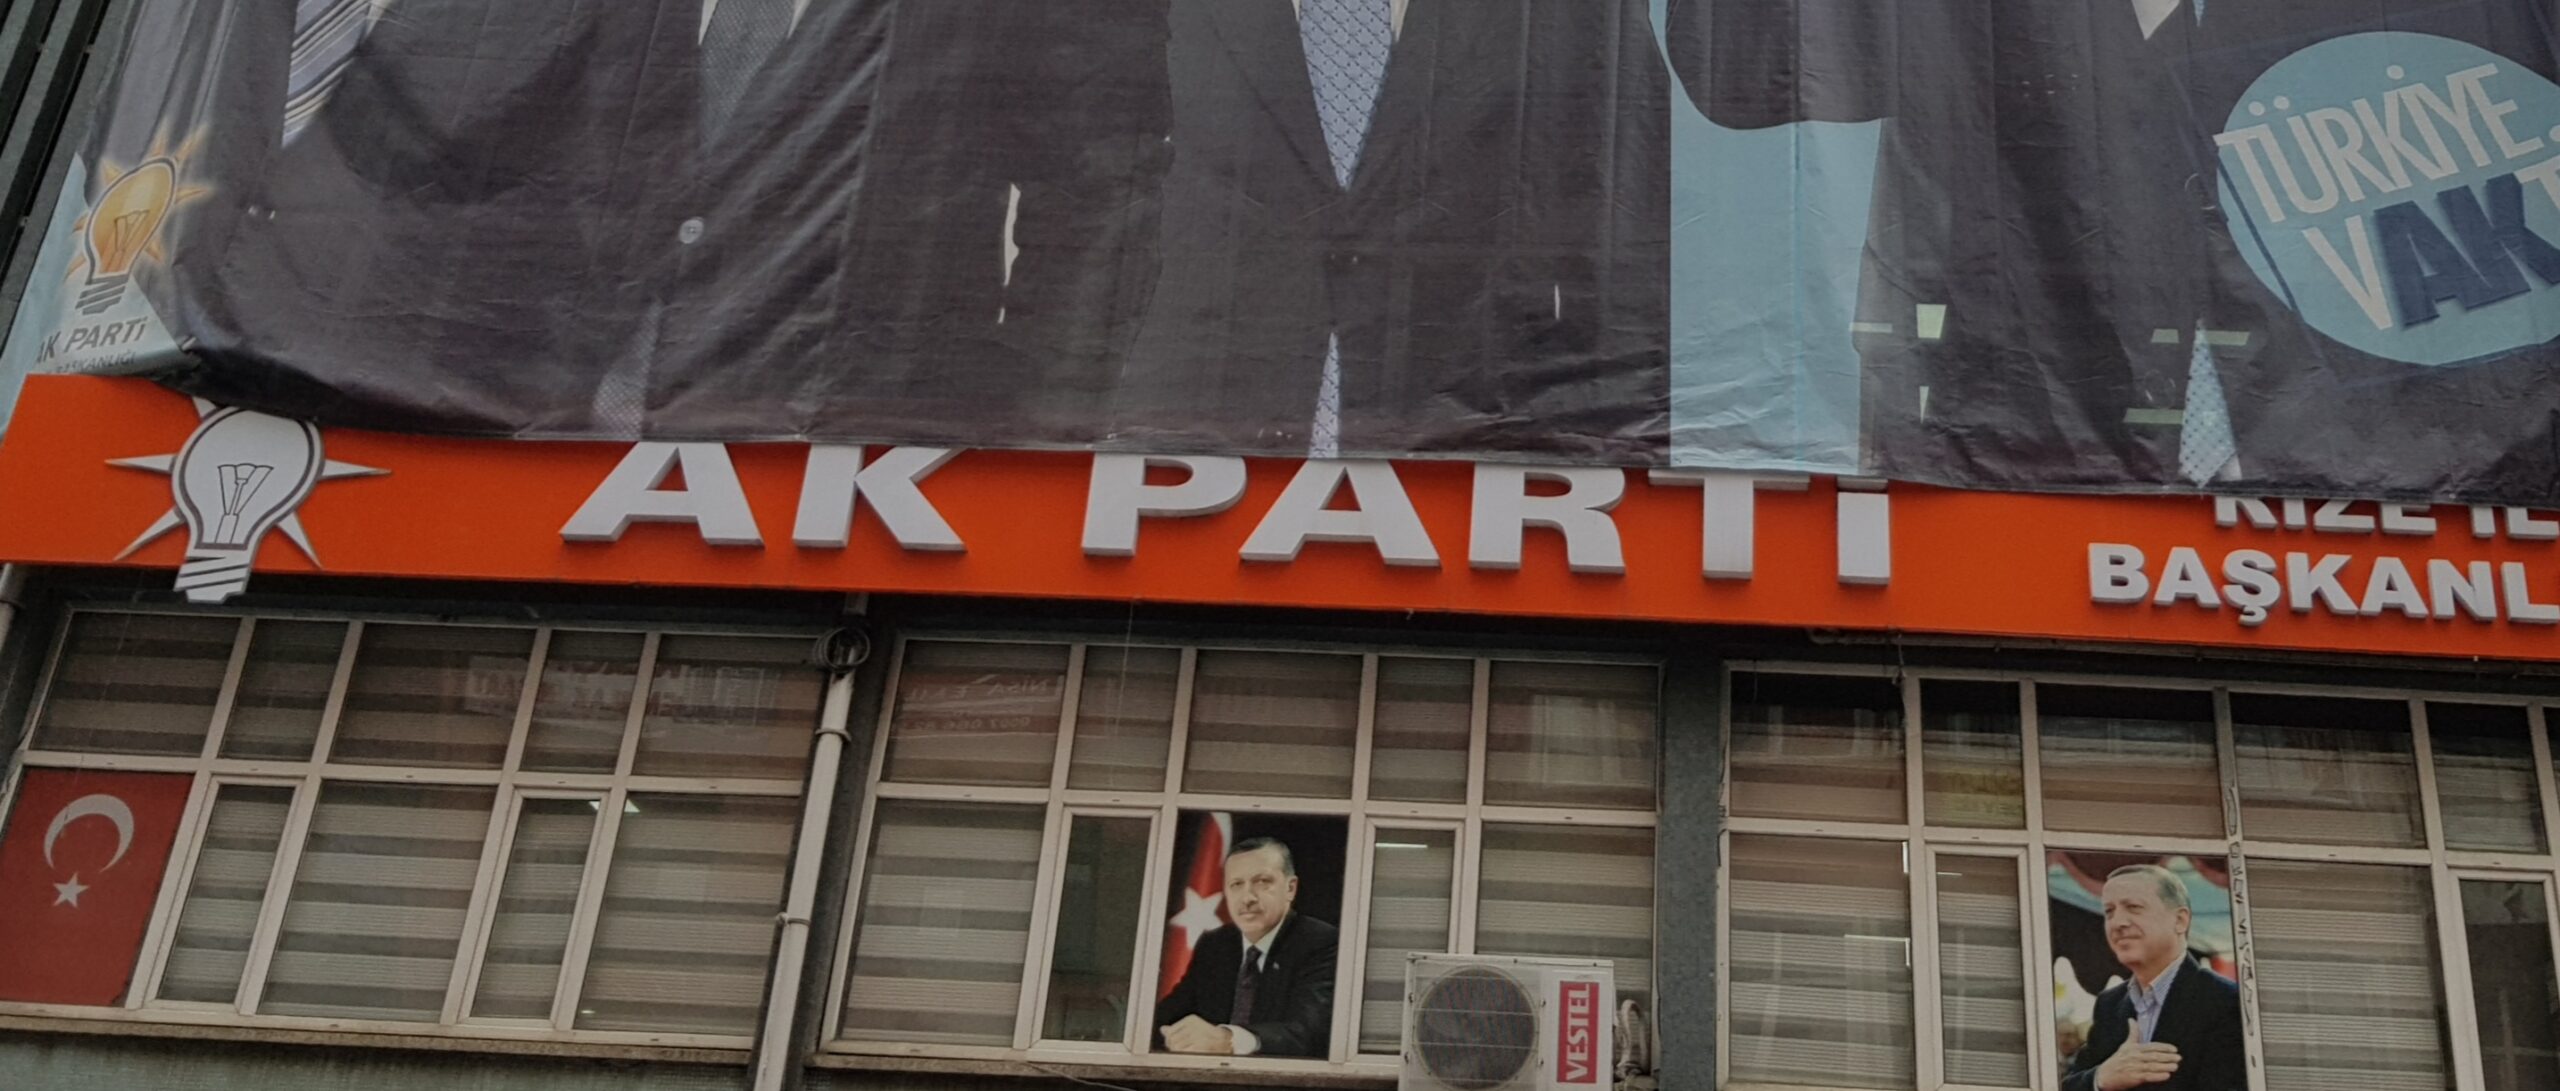 Rize AK Parti’de istifa depremi ,5 ilçe başkanı istifa etti